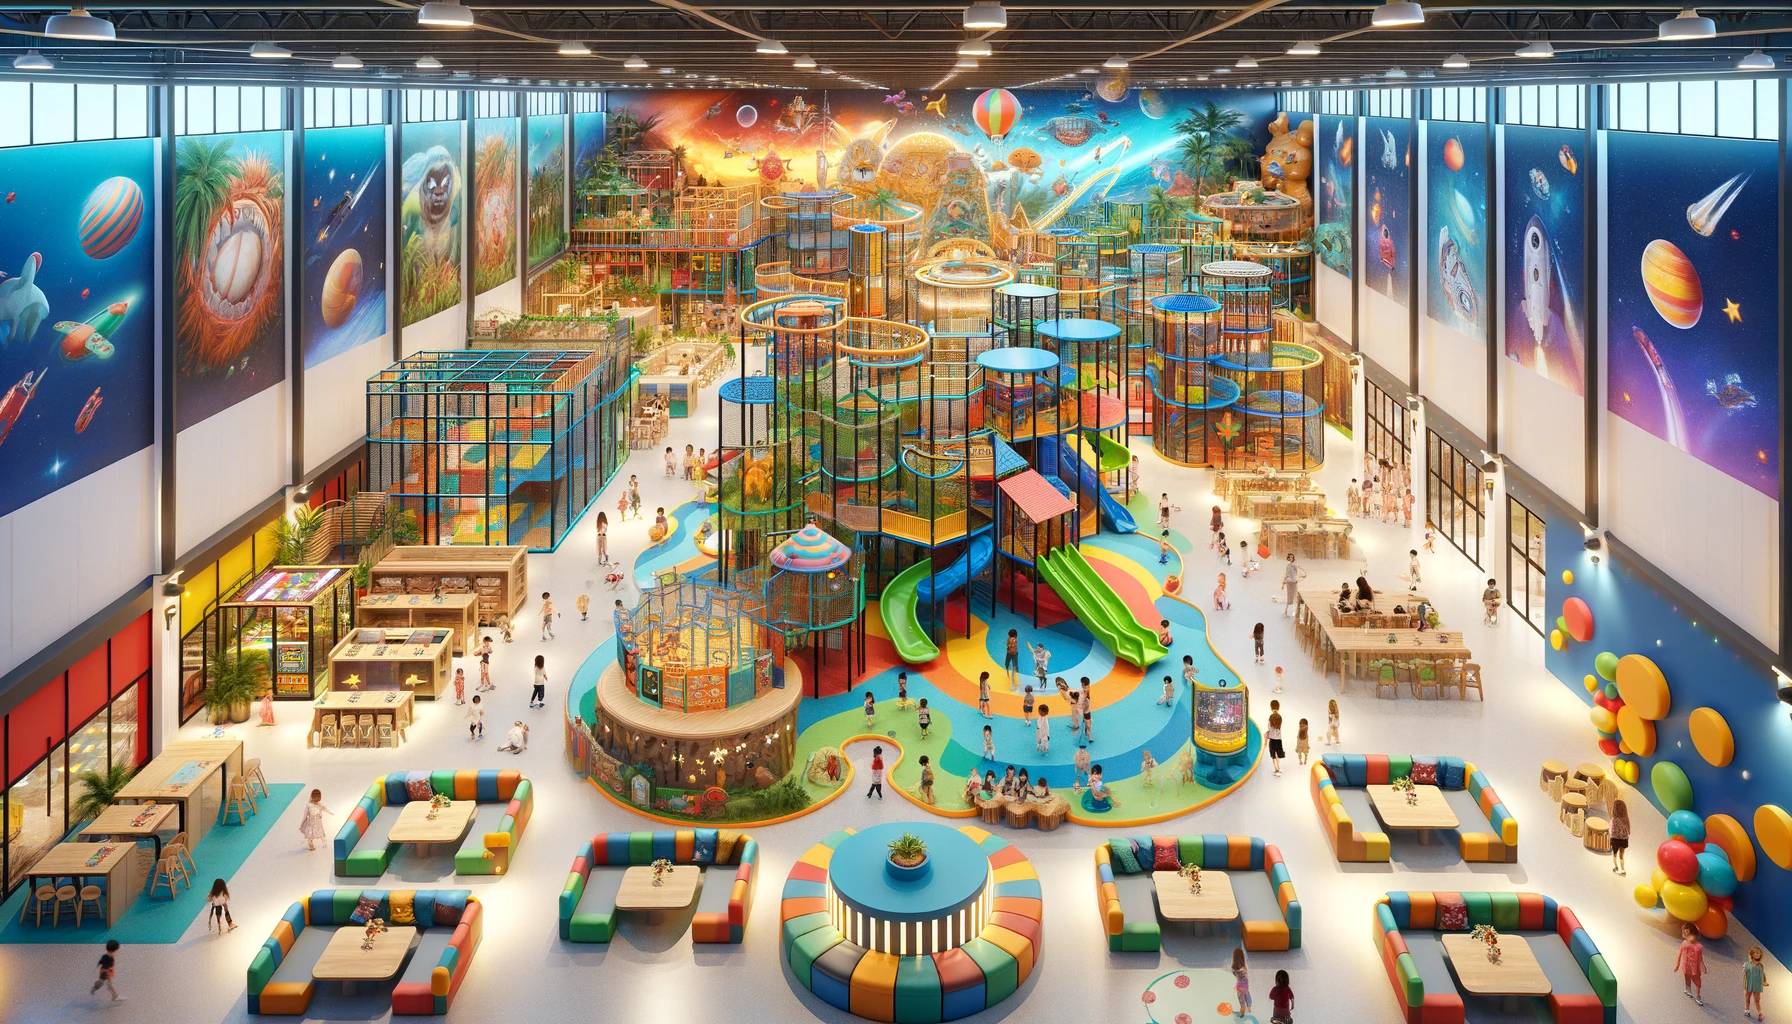 1700 square meter indoor playground-dream garden